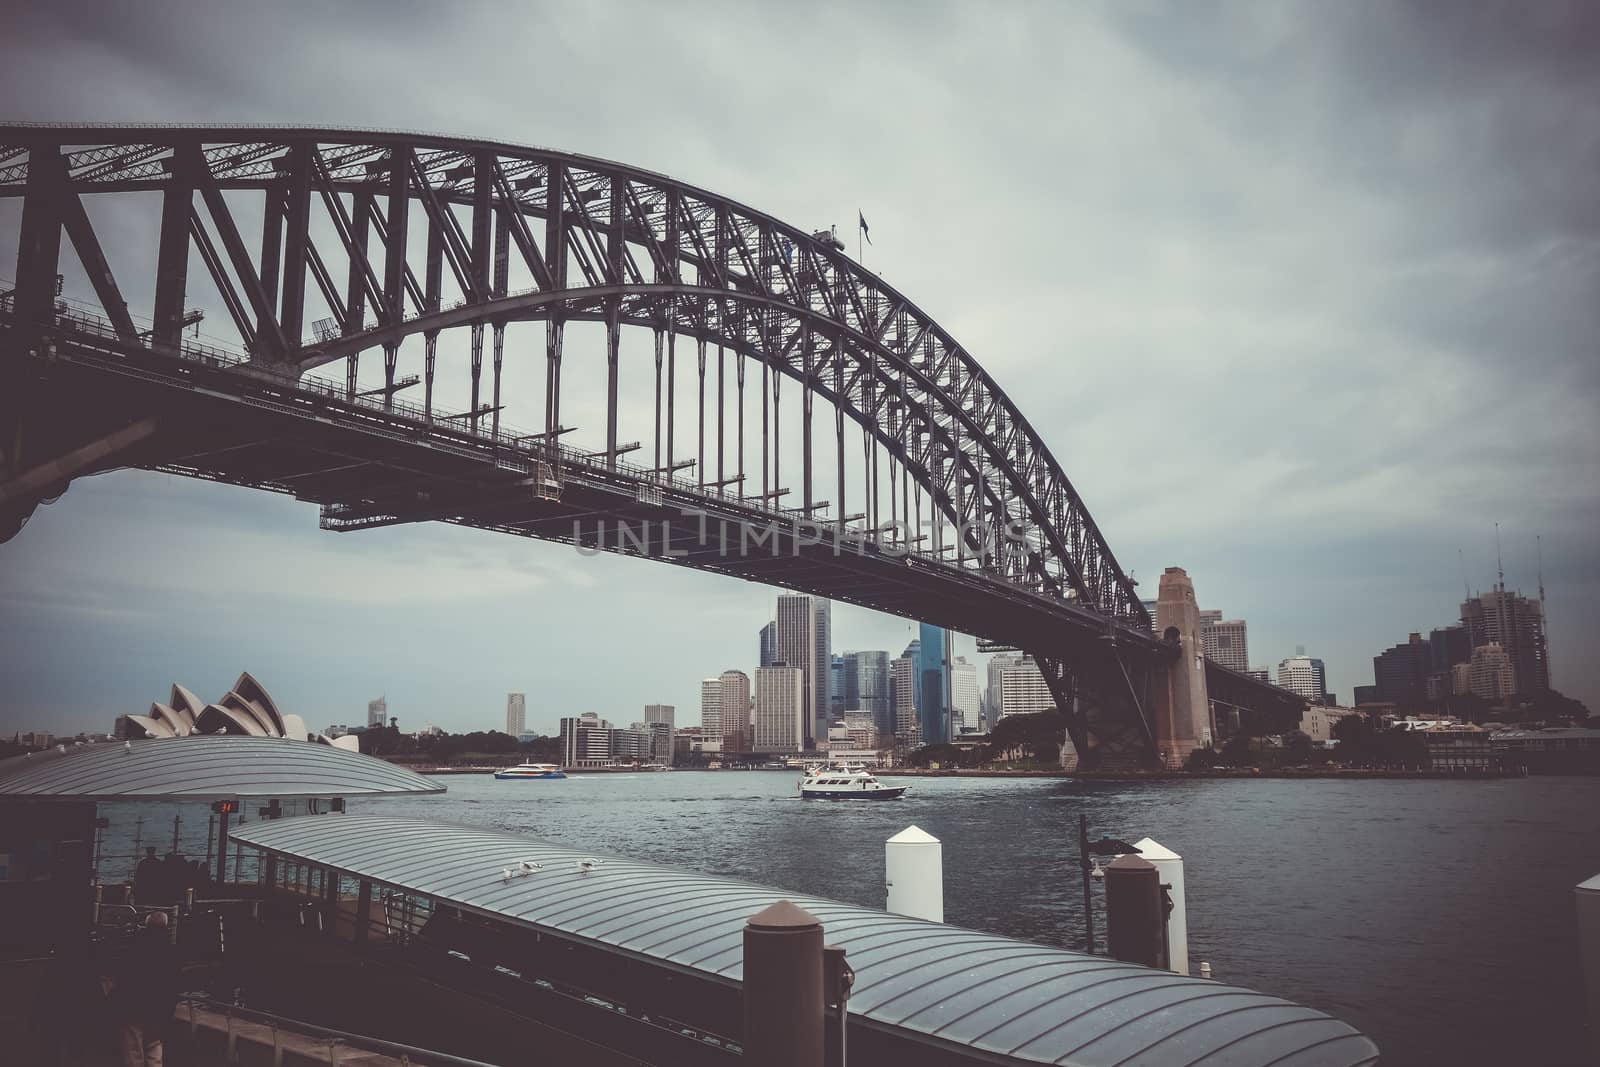 Sydney Harbour Bridge, Australia by daboost